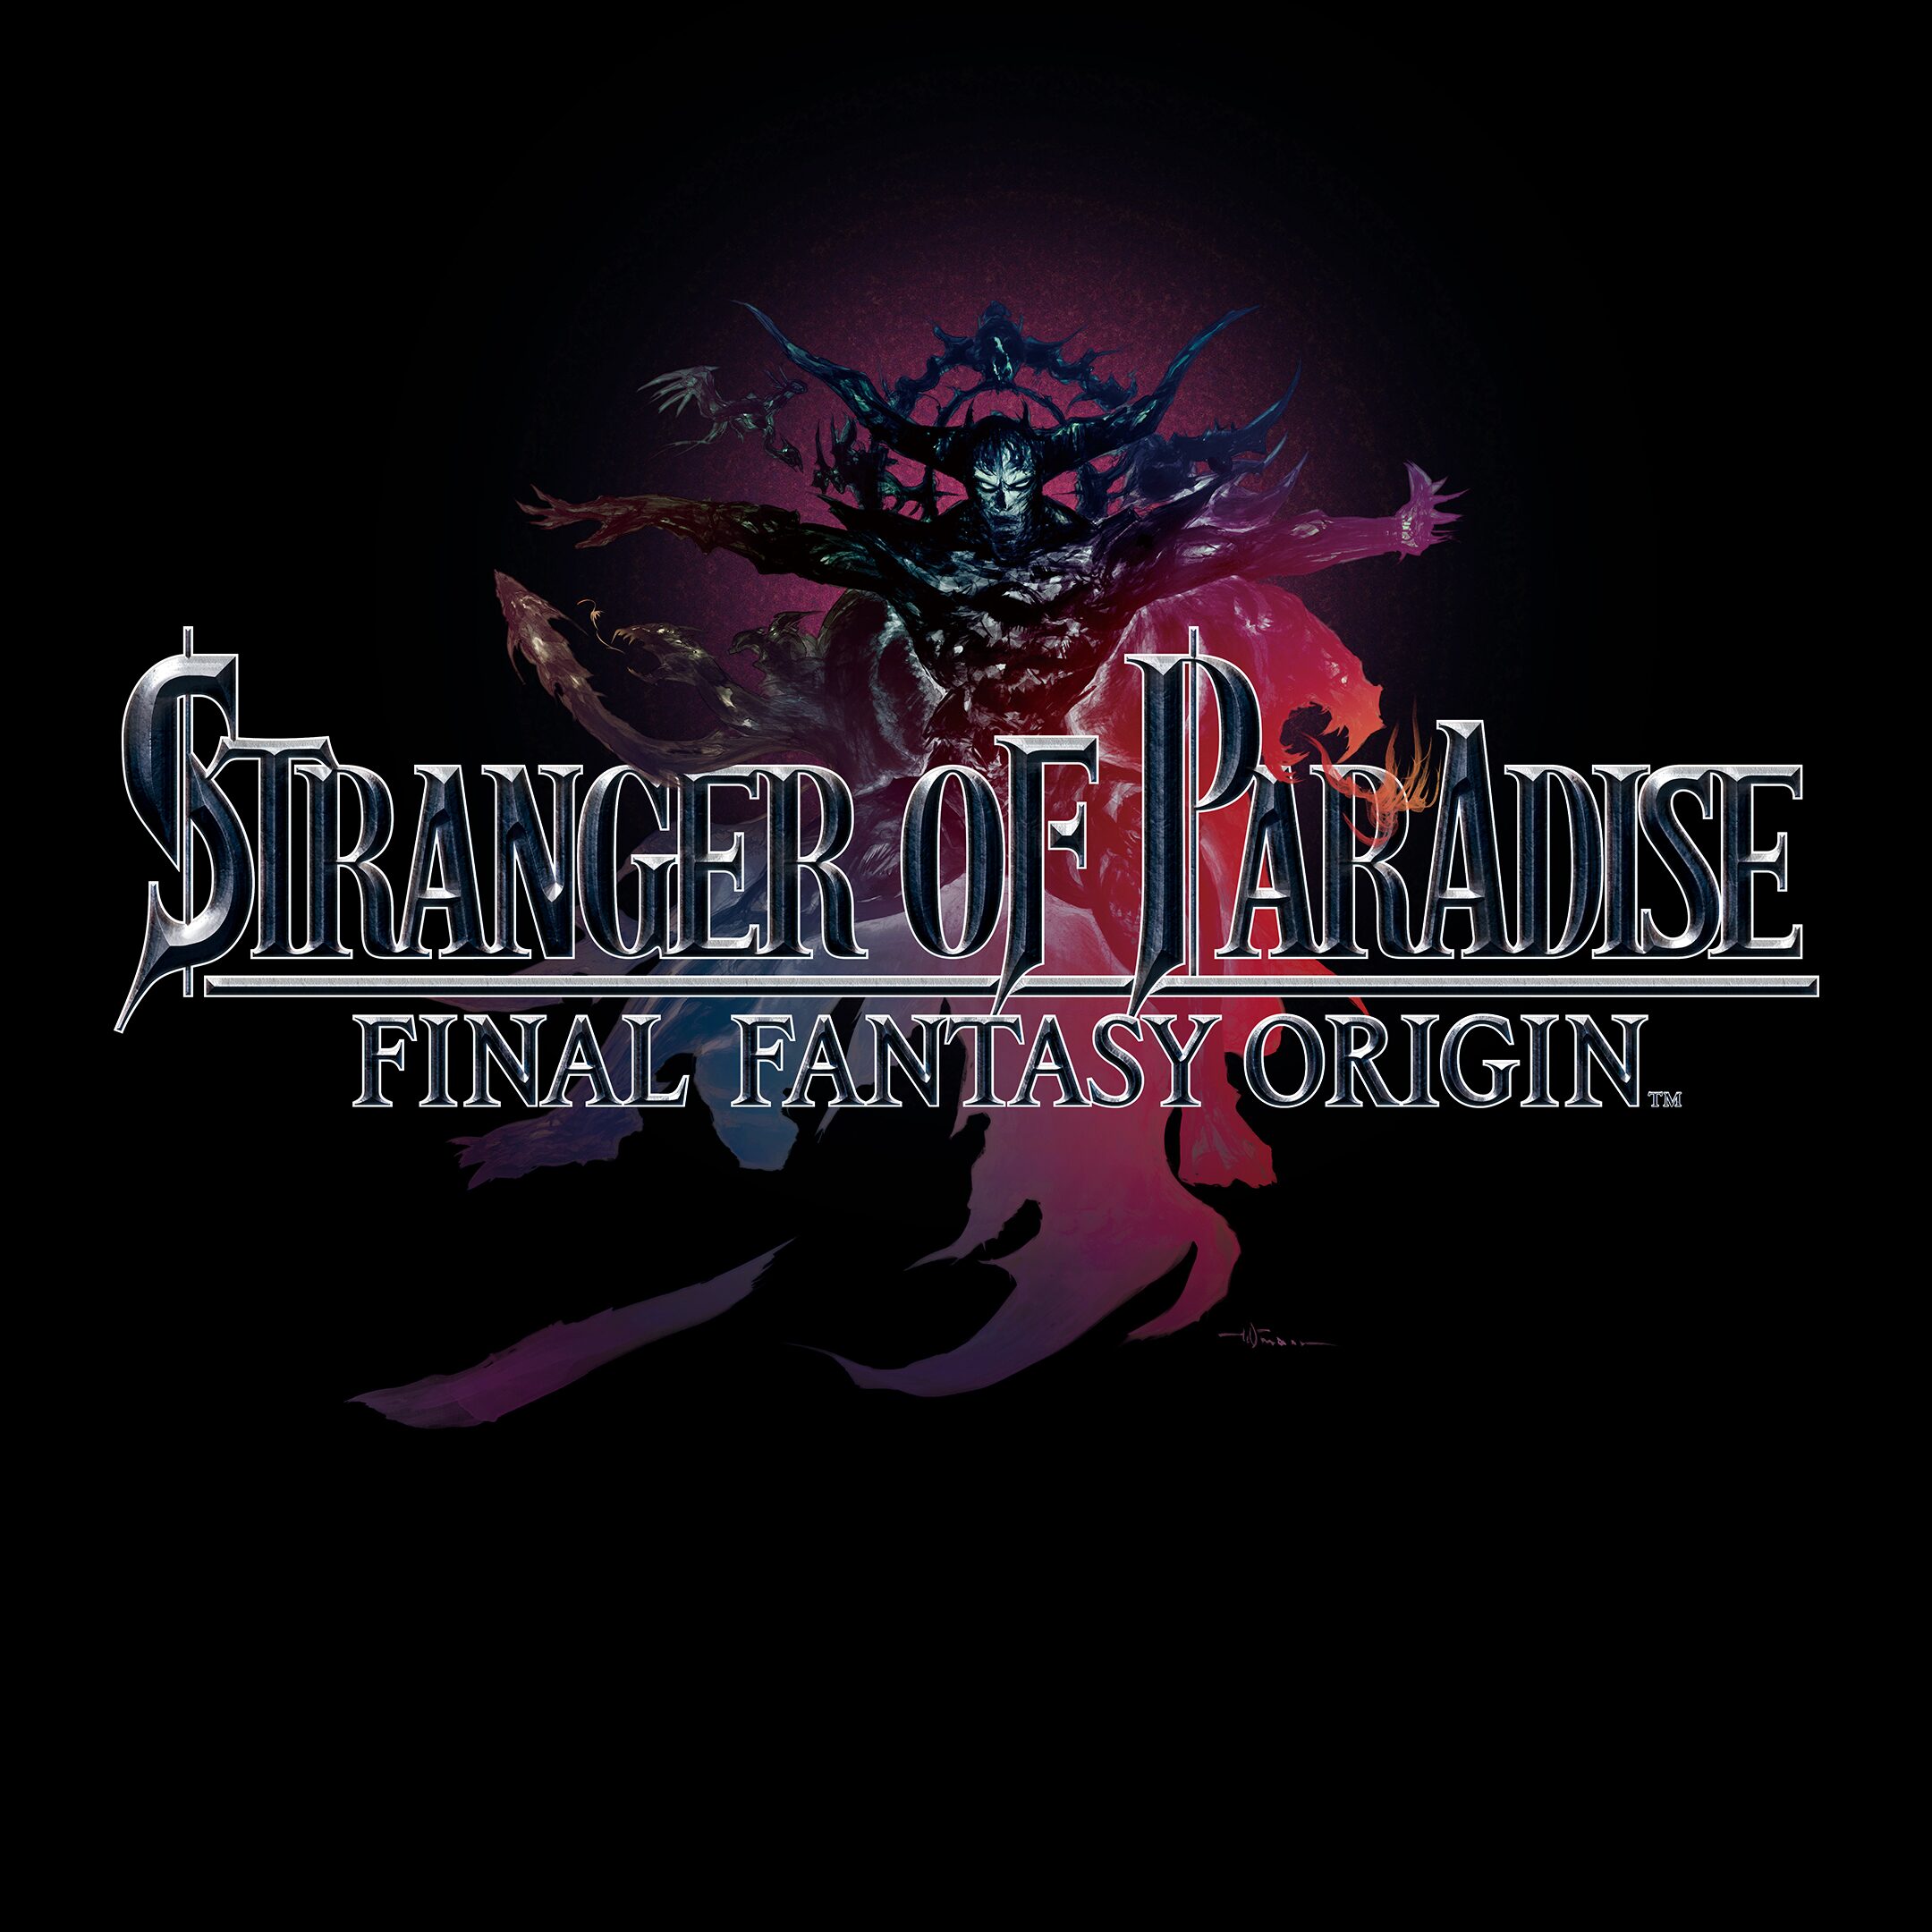 [CT] Stranger of Paradise Final Fantasy Origin - Launch